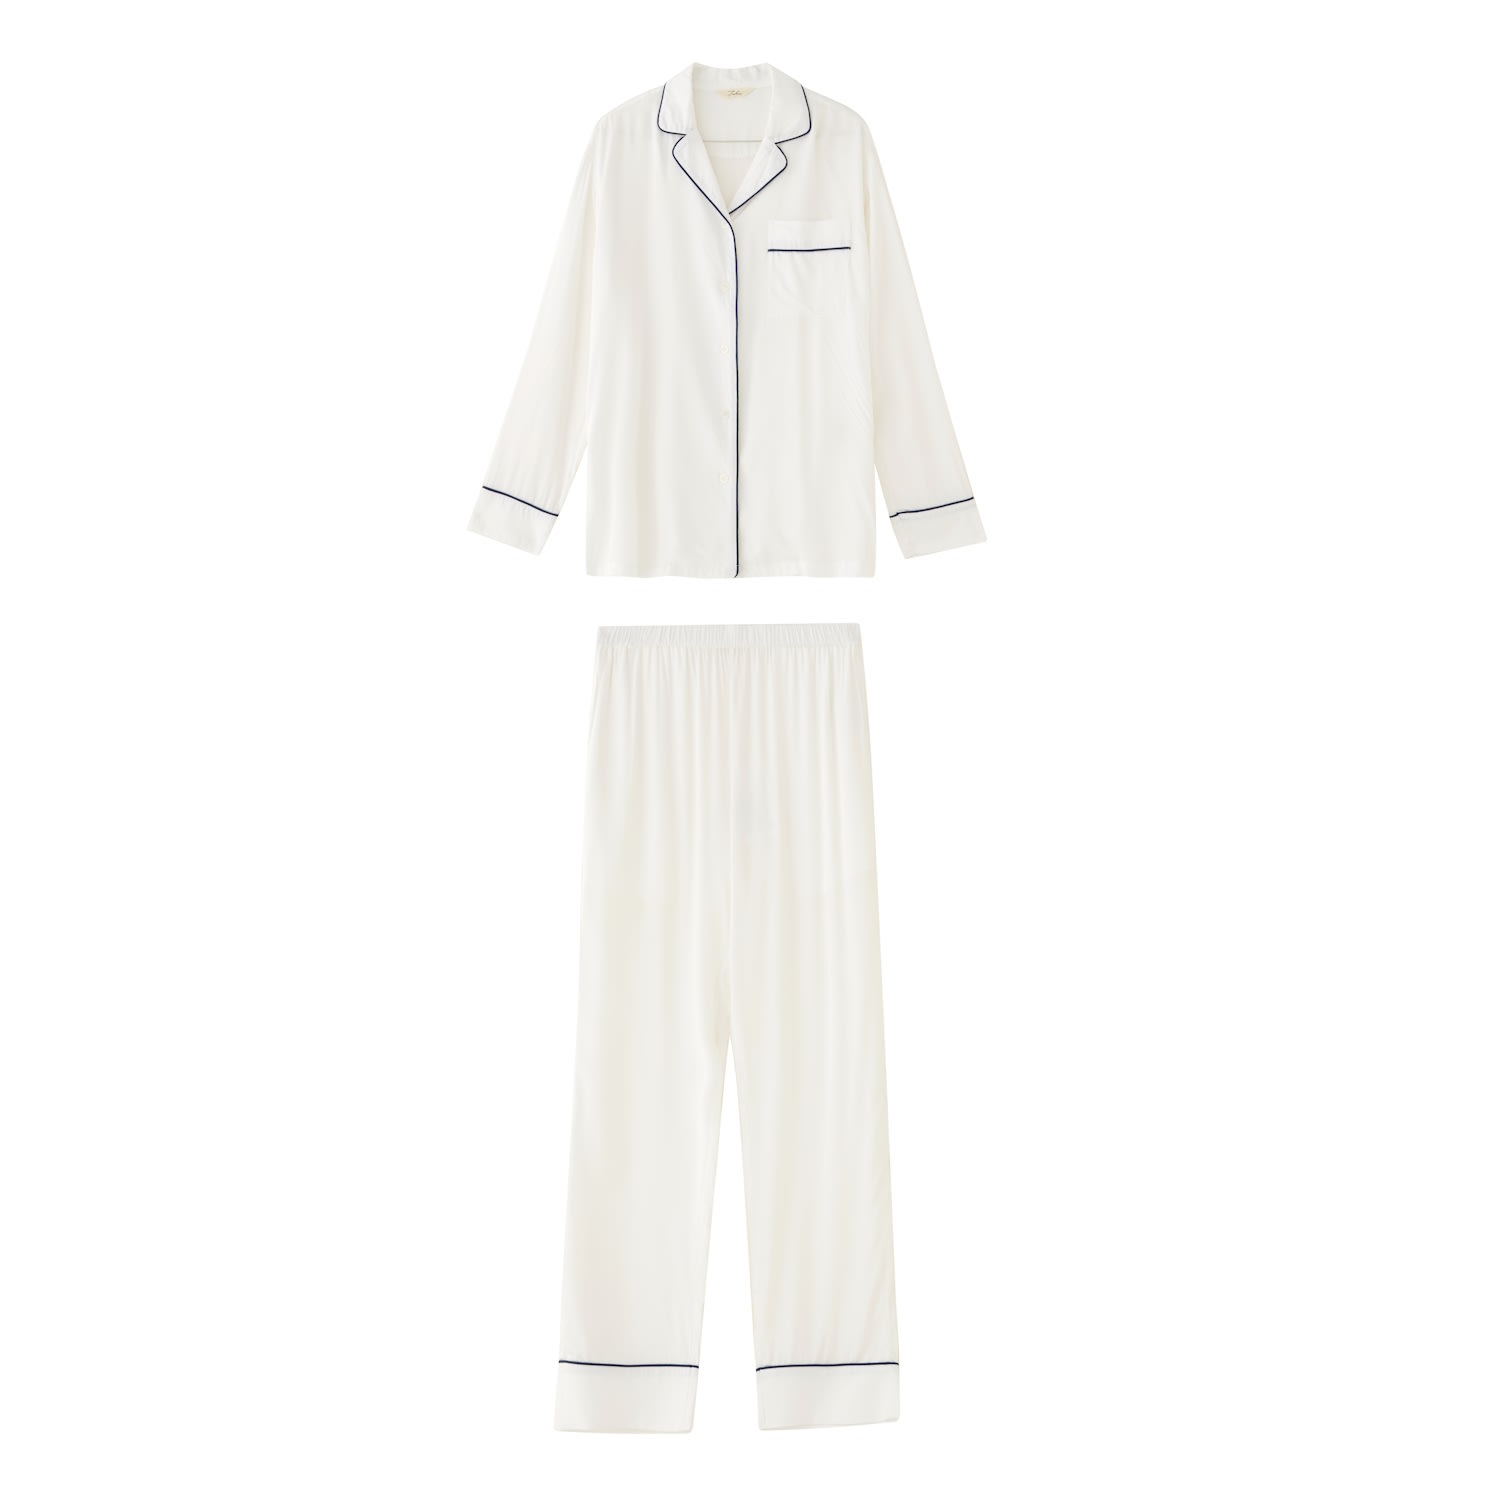 Women’s Comfort Bamboo Pajama Set - White Large Notlabeled